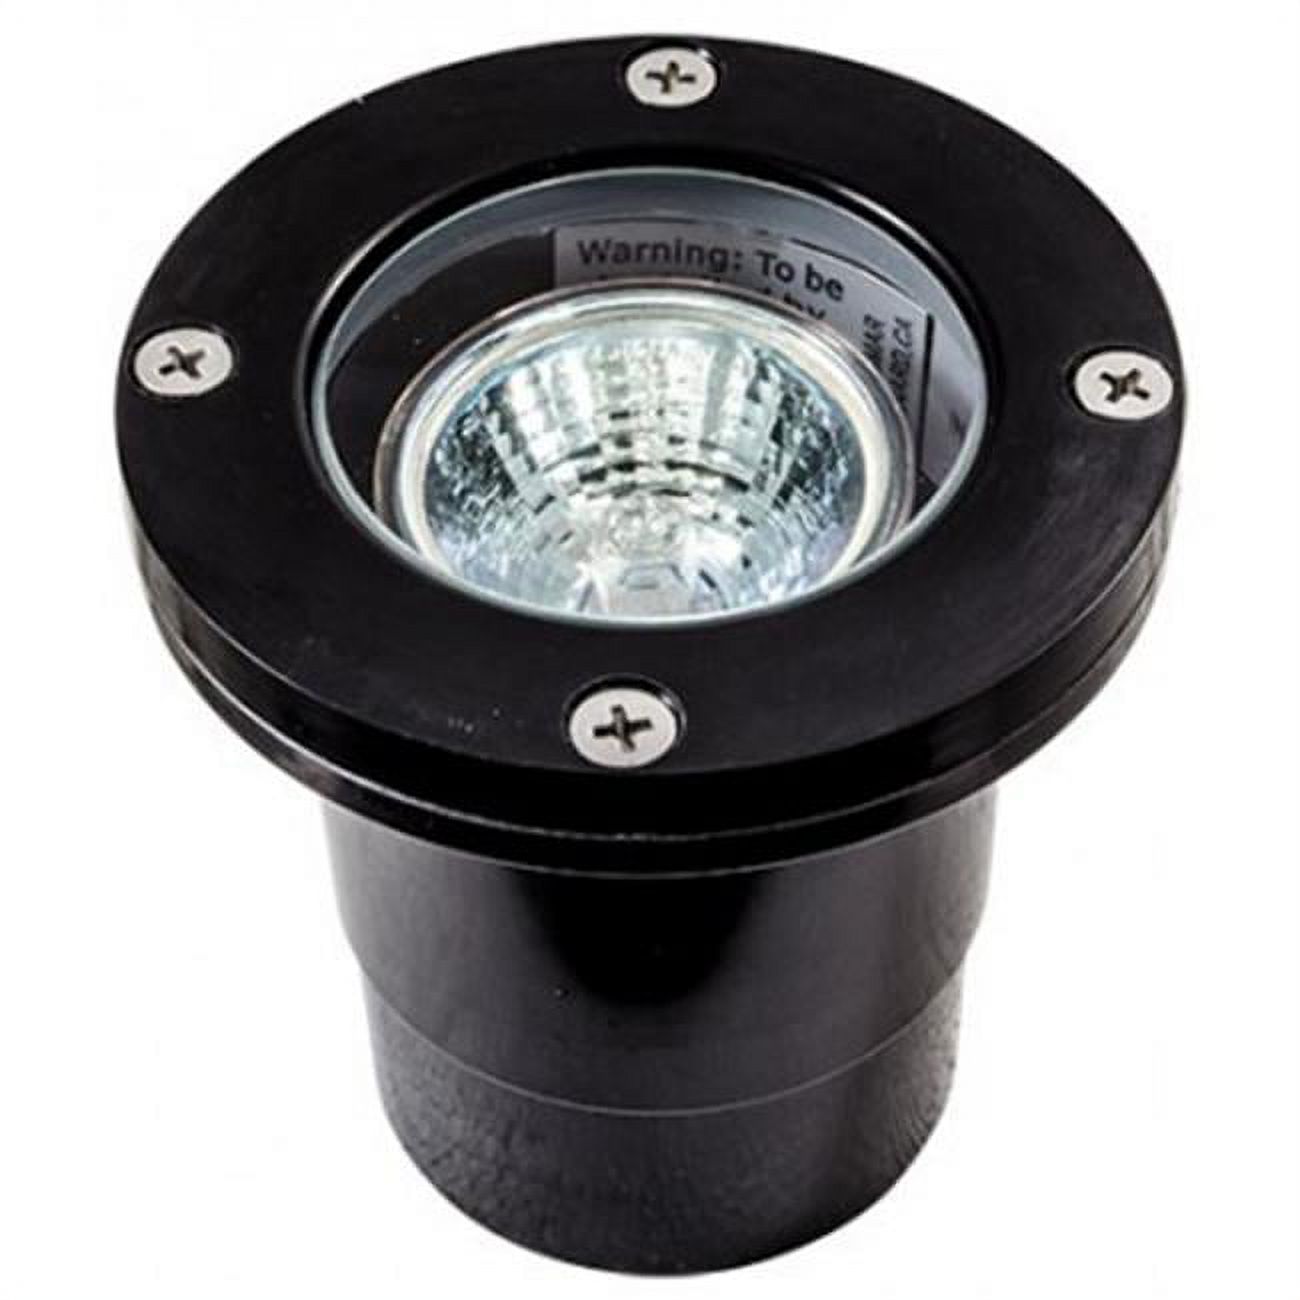 Dabmar Lighting FG318-B 20 watt Fiberglass Well Light without Grill - MR16, Black - 12V - image 1 of 1